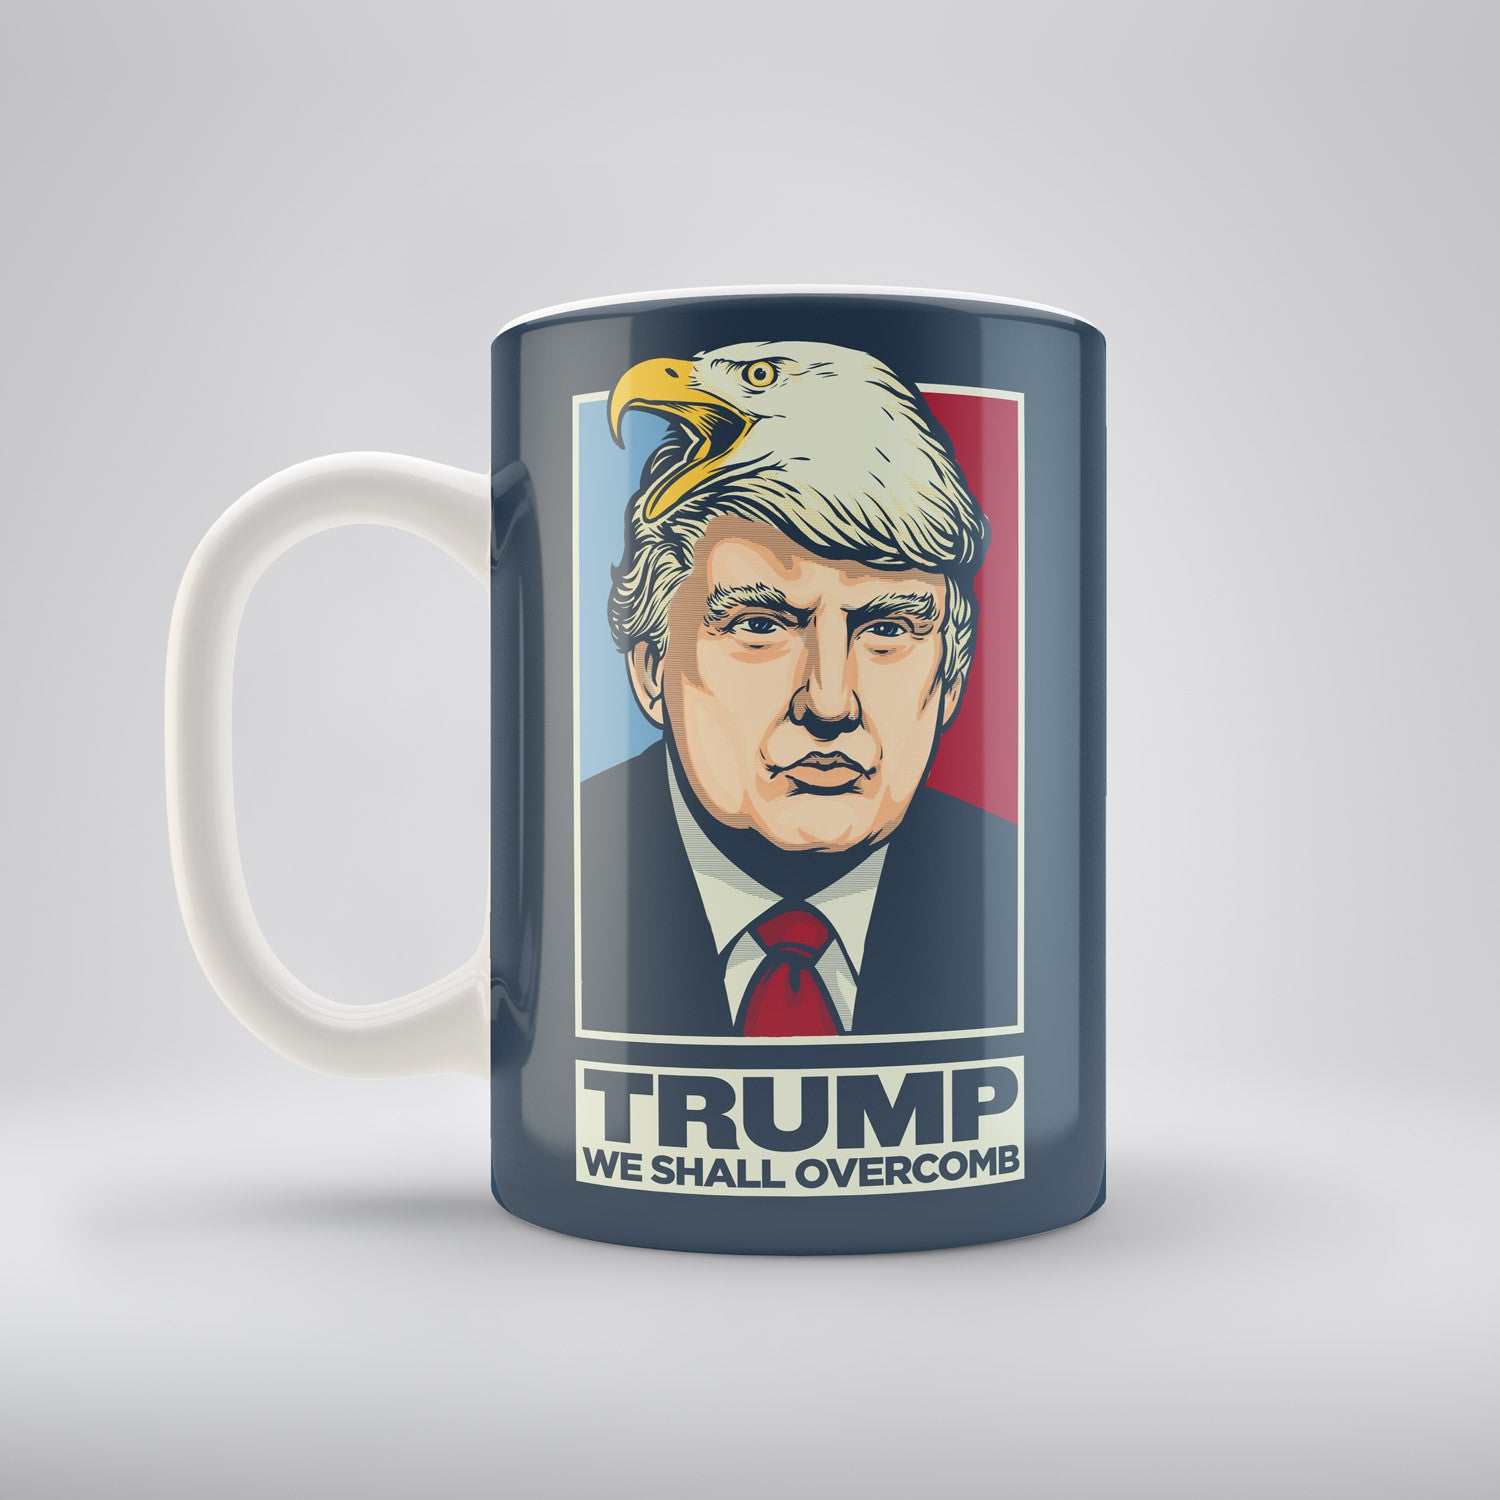 Donald Trump We Shall Overcomb Mug